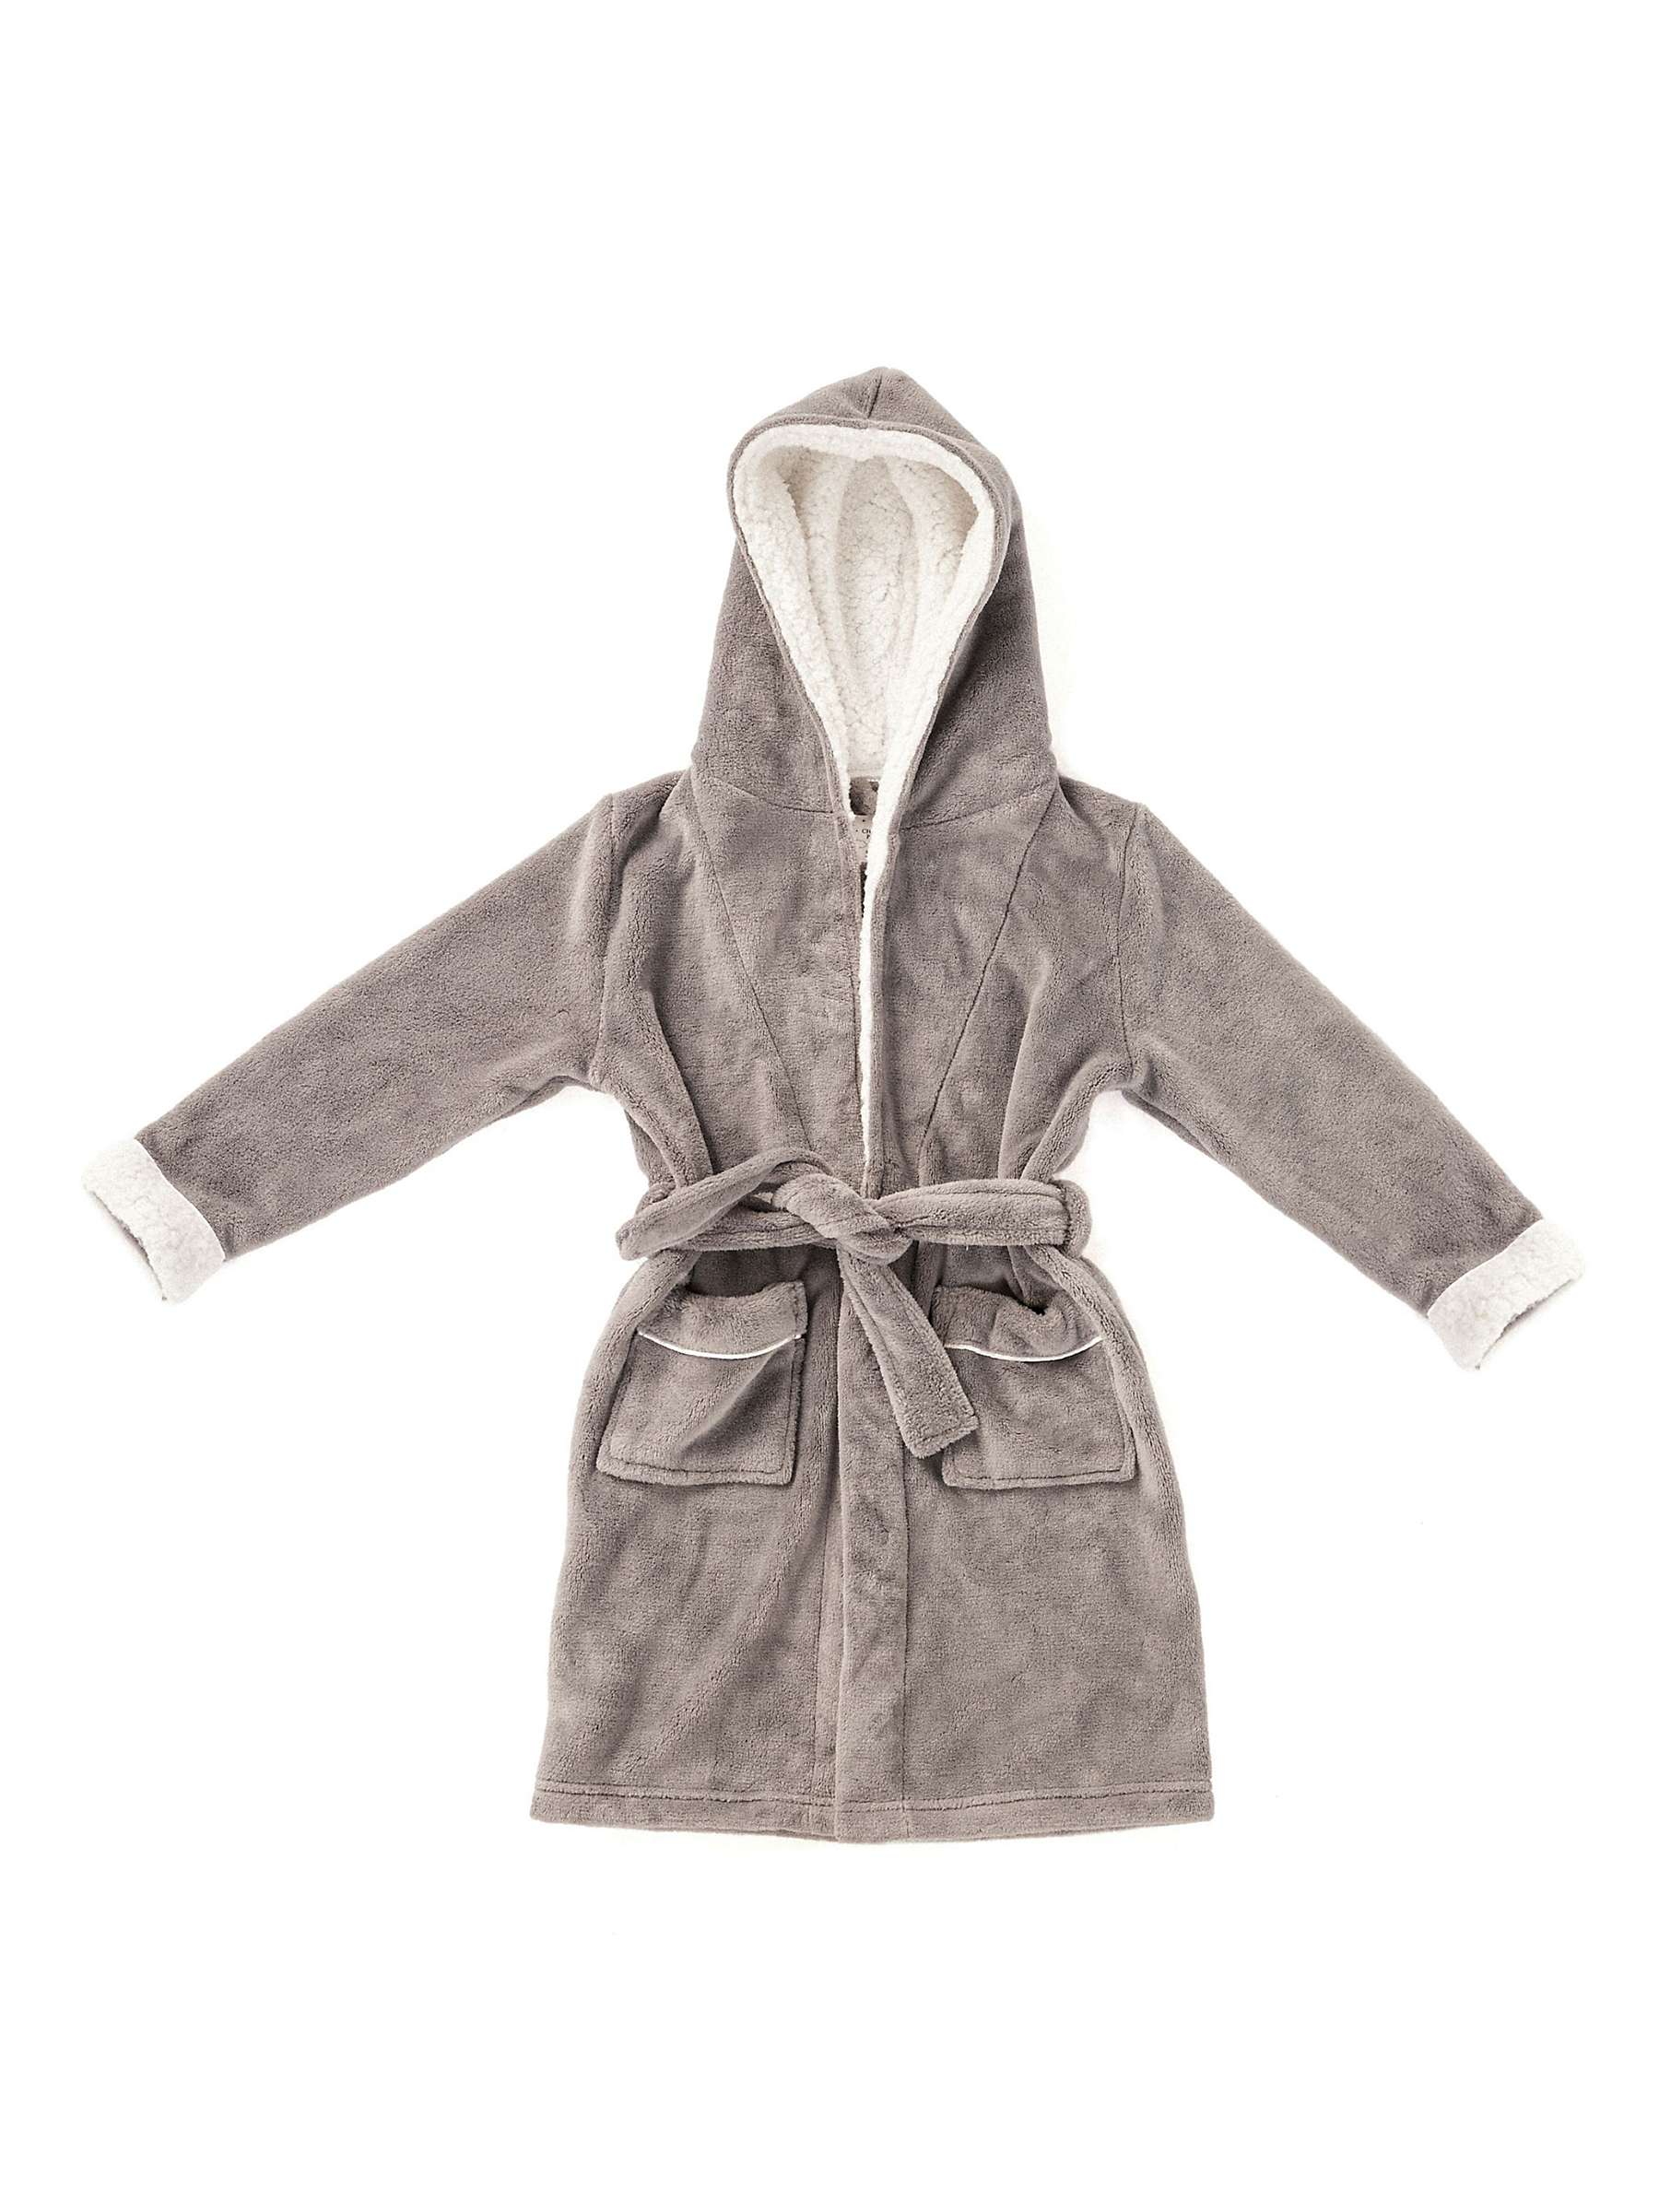 Buy Chelsea Peers Kids' Fluffy Hooded Dressing Gown Online at johnlewis.com